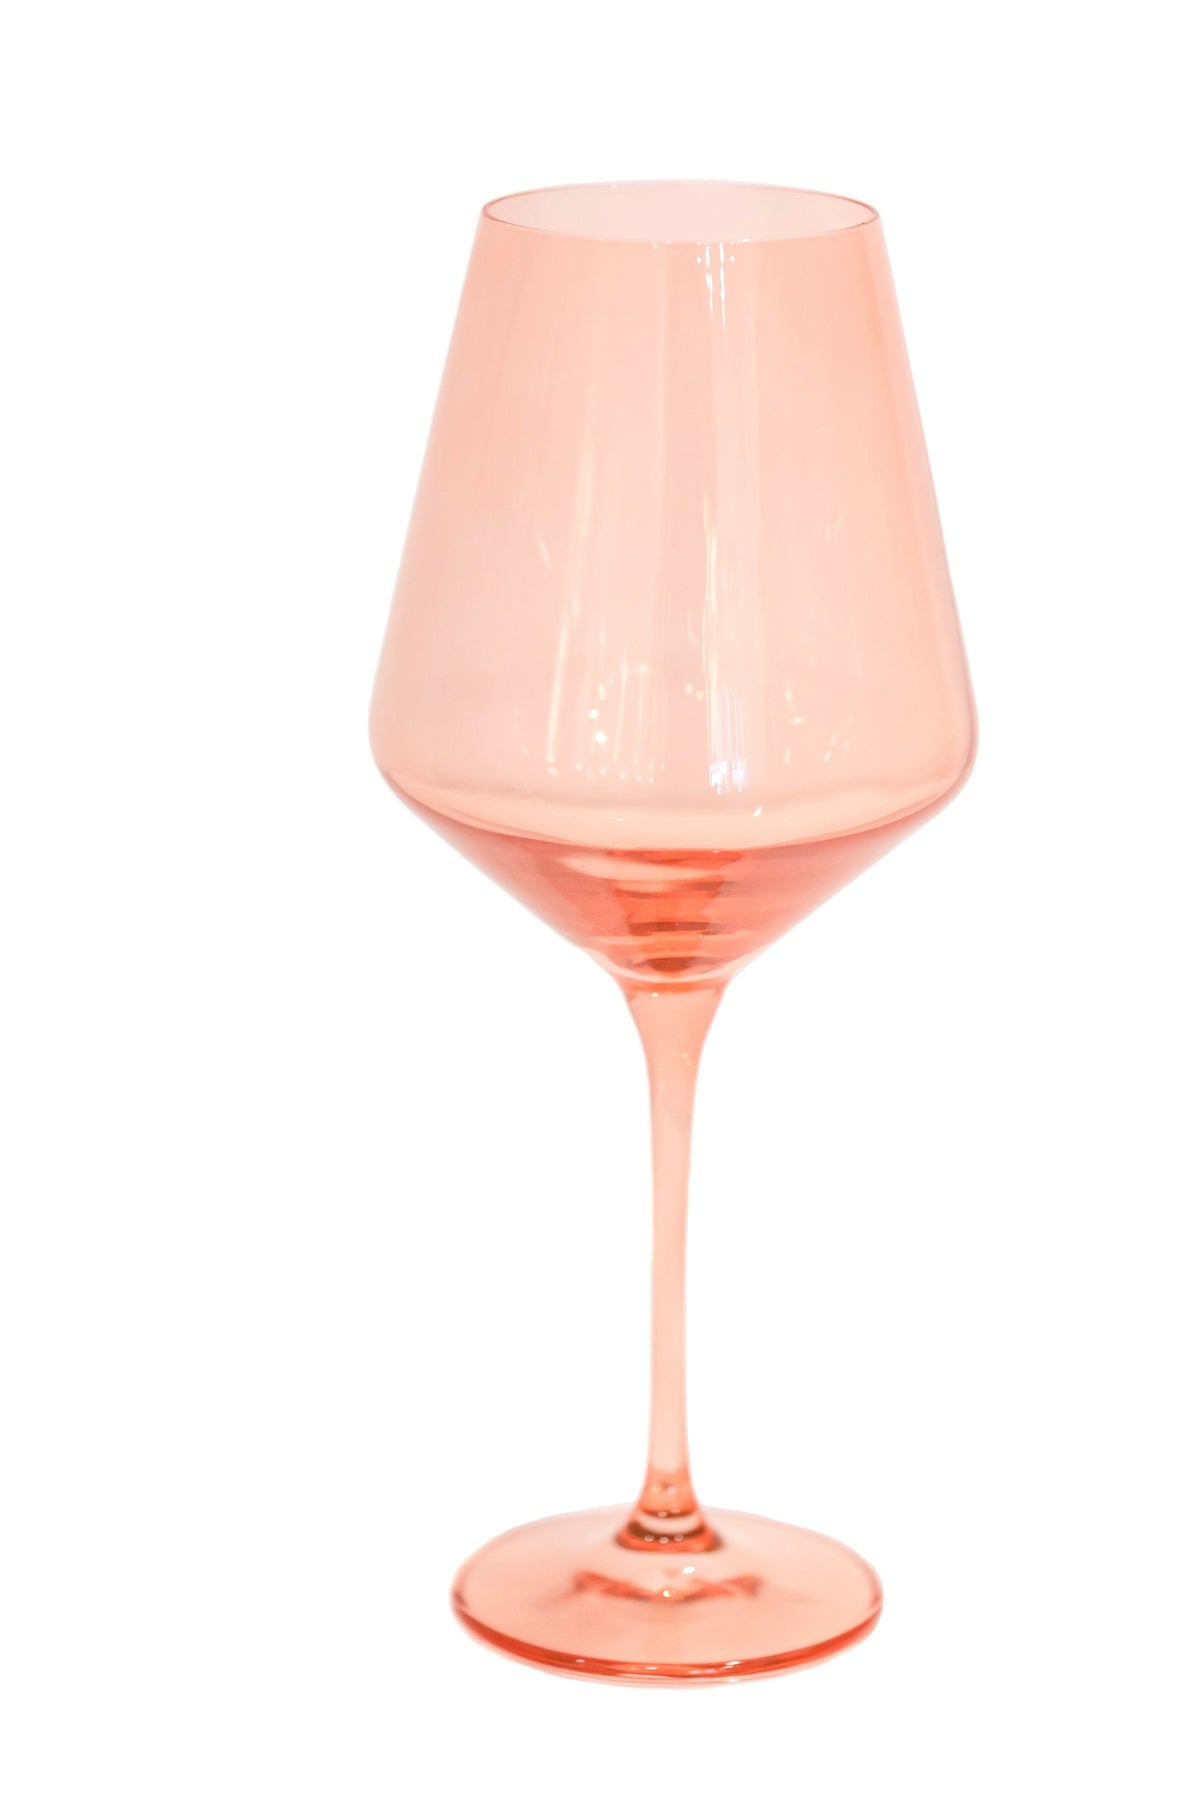 Wine Stemware, Set of 6 Coral Peach Pink